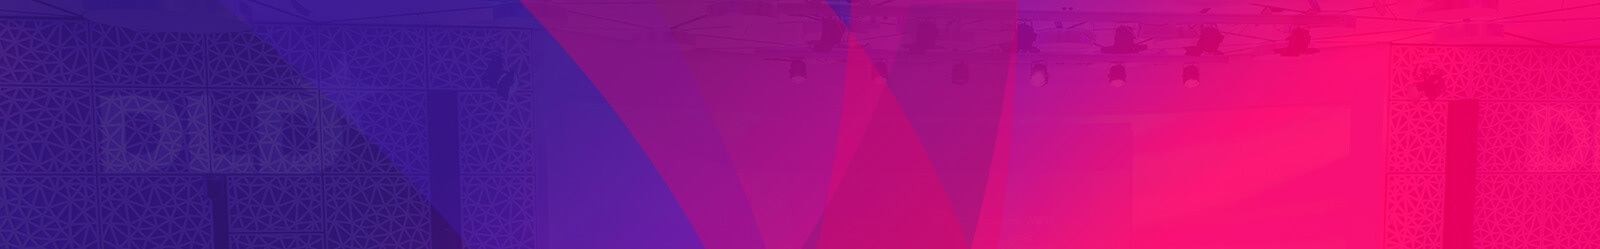 Color Waves Media's profile banner